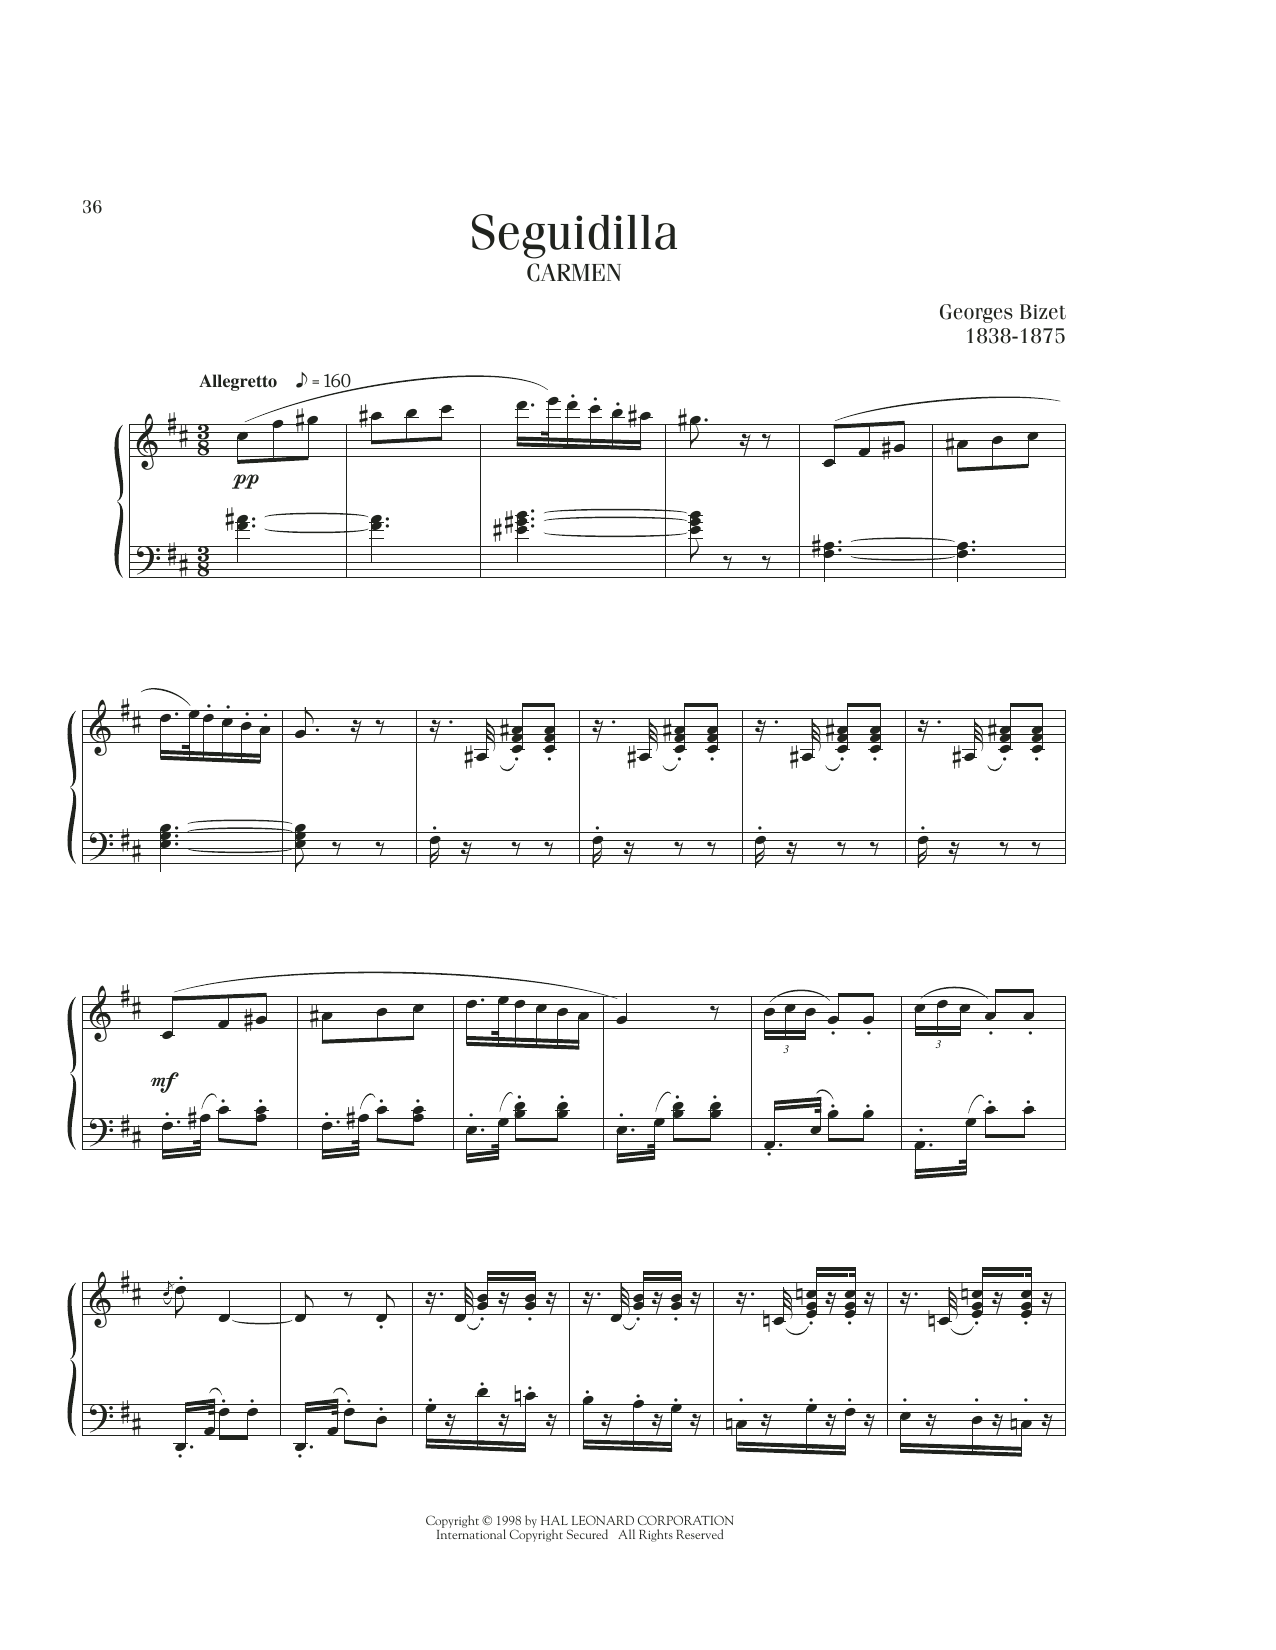 Georges Bizet Seguidilla sheet music notes printable PDF score